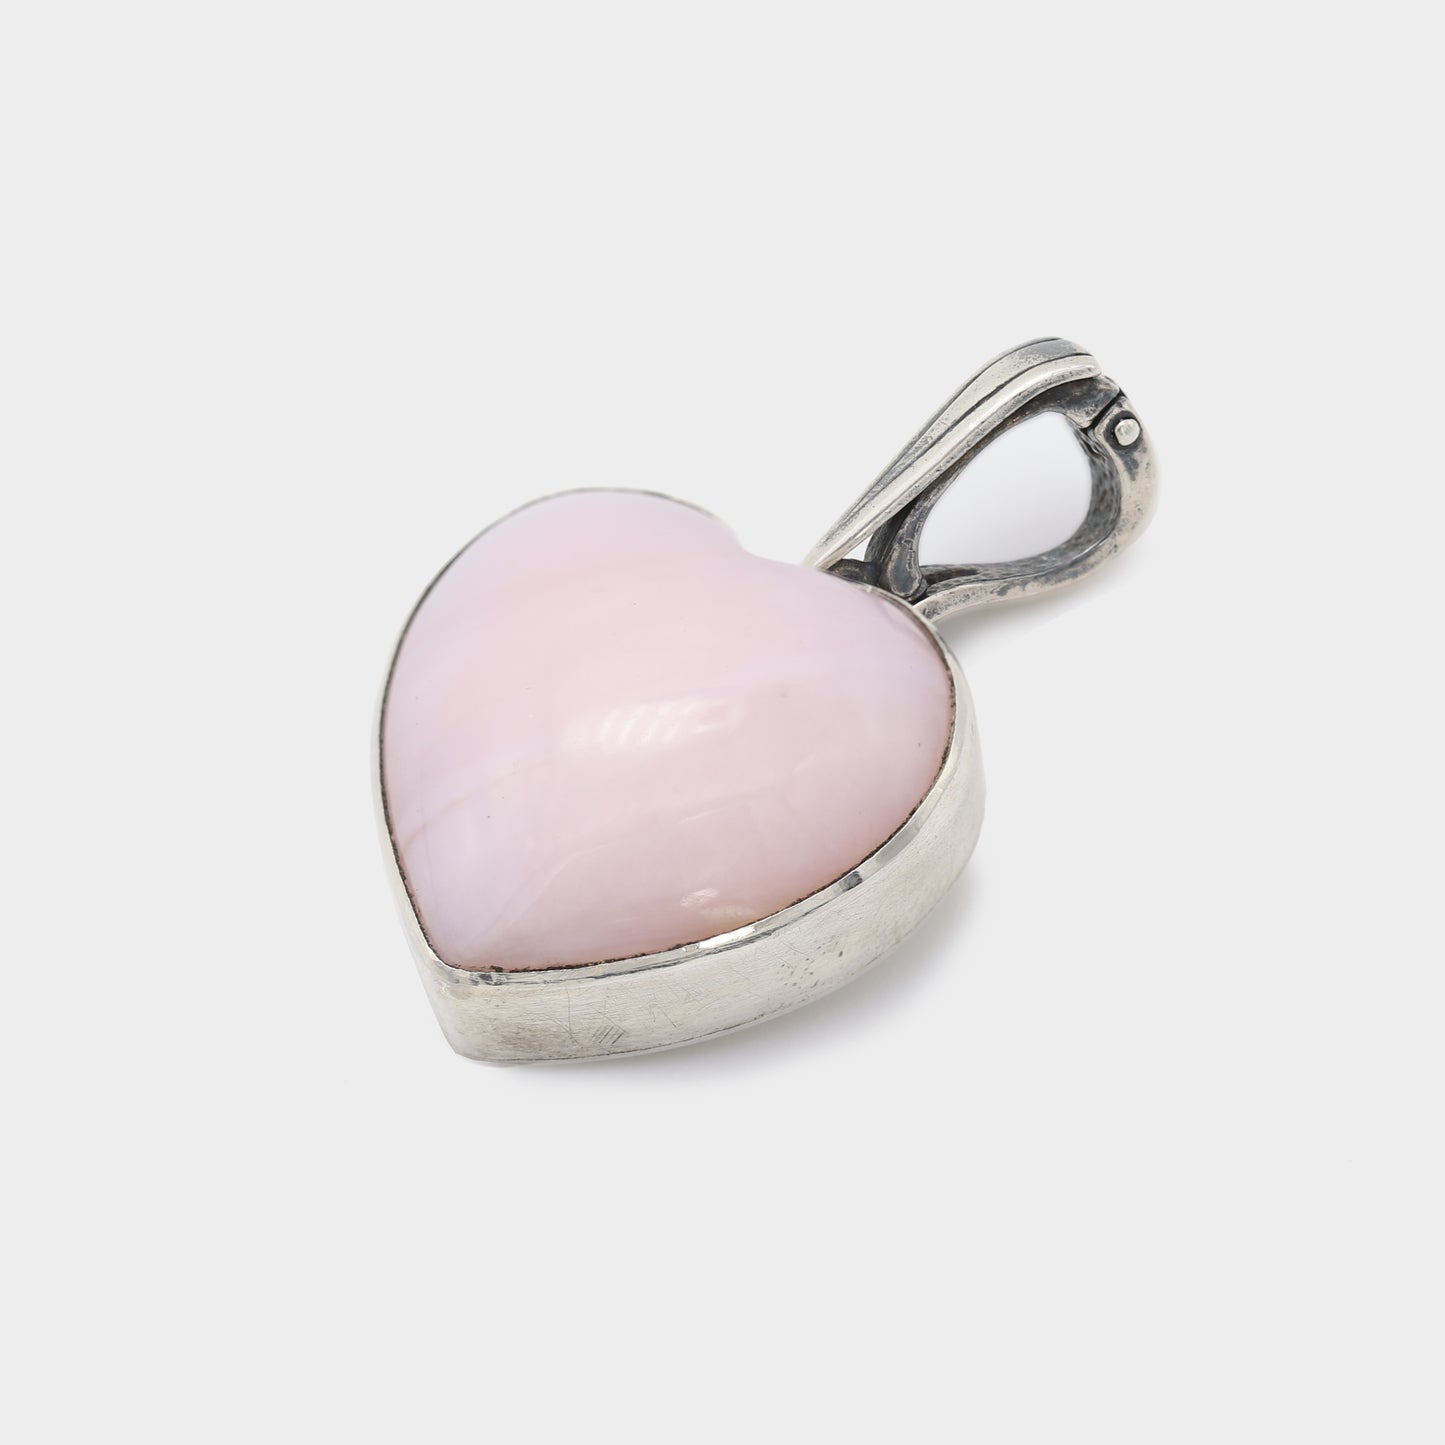 Pink Opal Heart Amulet Pendant